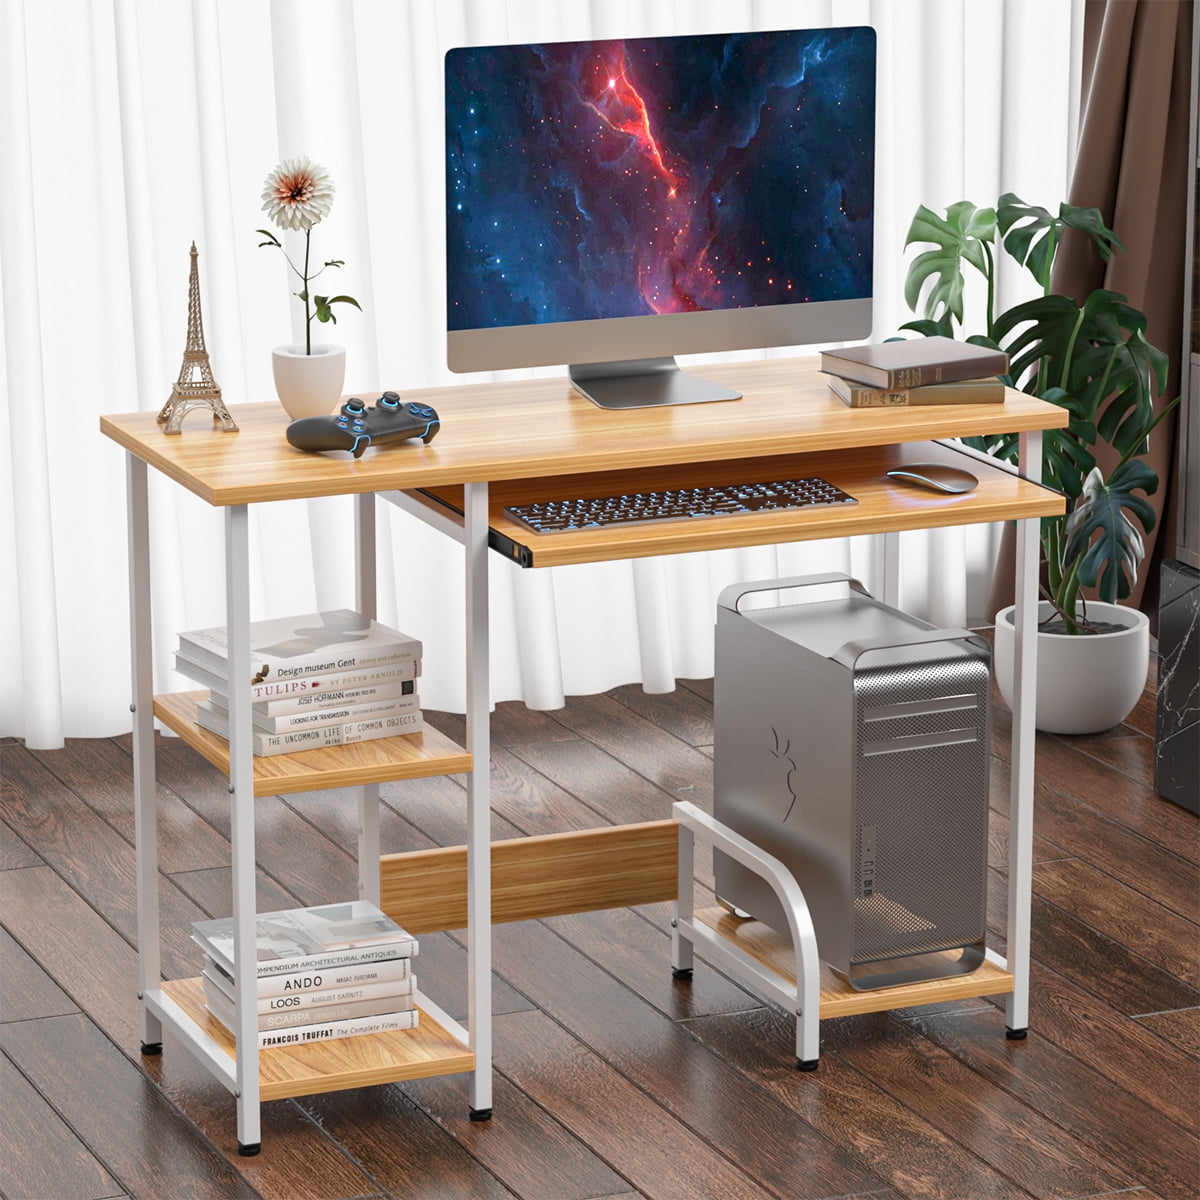 Details about   Computer Desk Home Office Desk PC Laptop Study Workstation Table Storage Shelf 